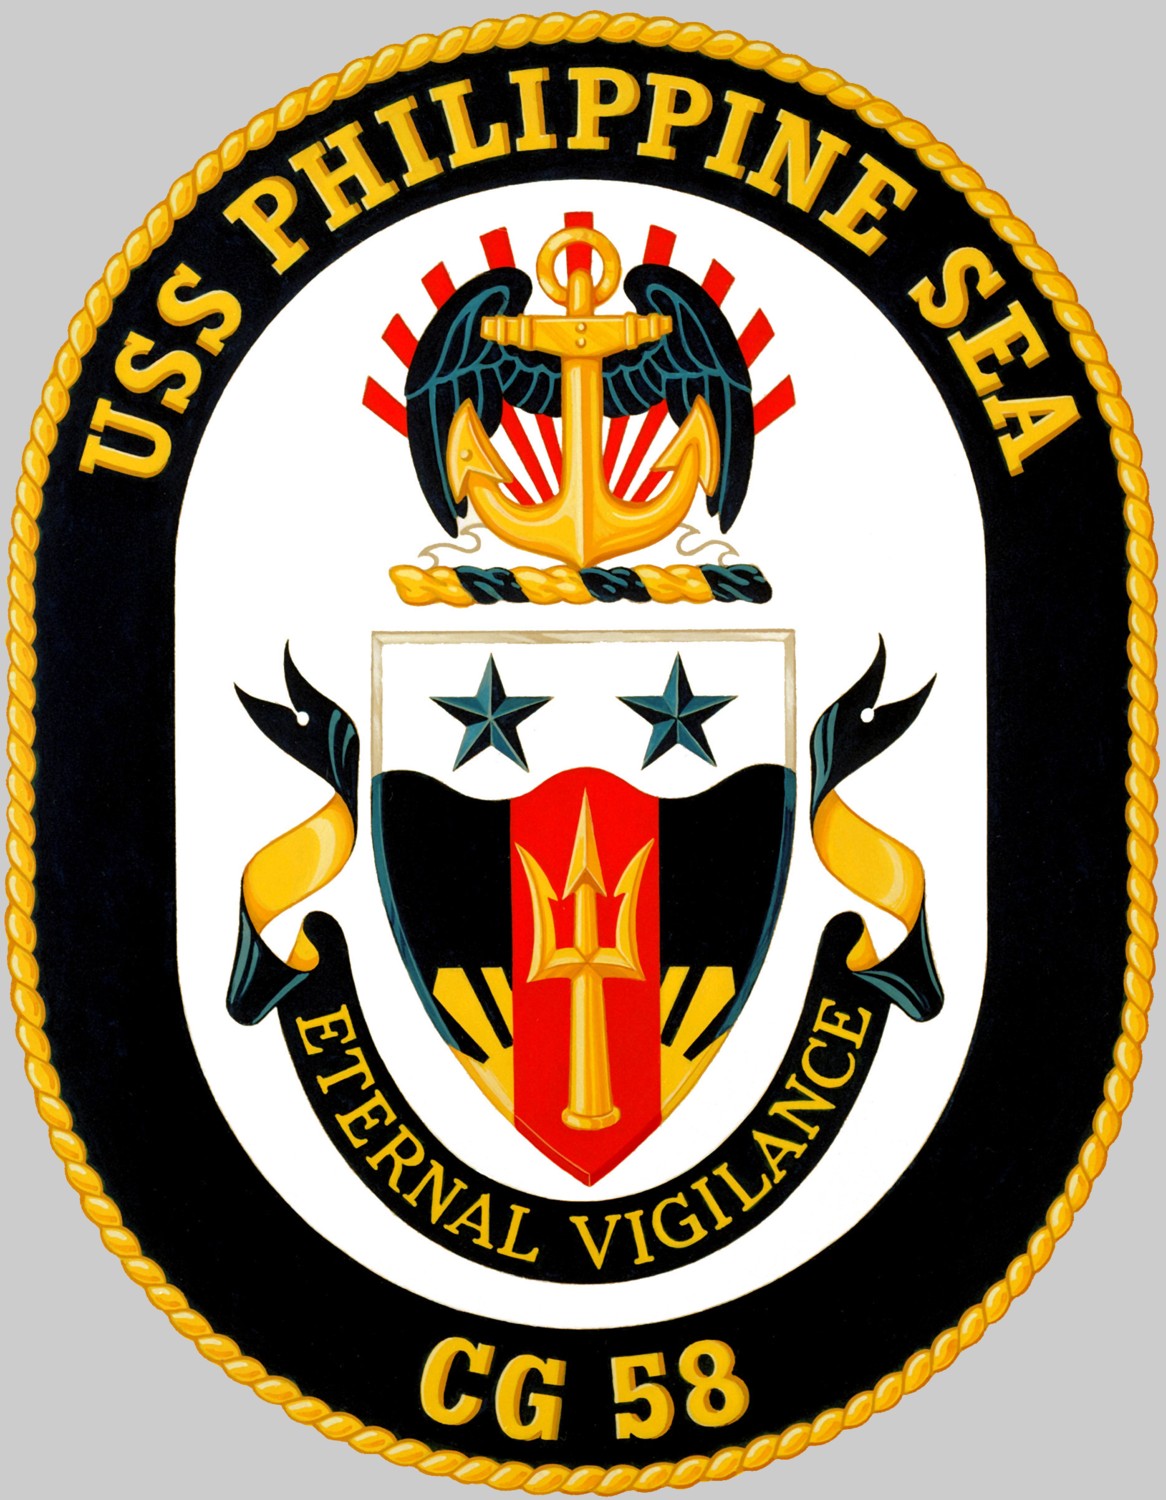 cg-58 uss philippine sea insignia crest patch badge ticonderoga class guided missile cruiser aegis us navy 02x